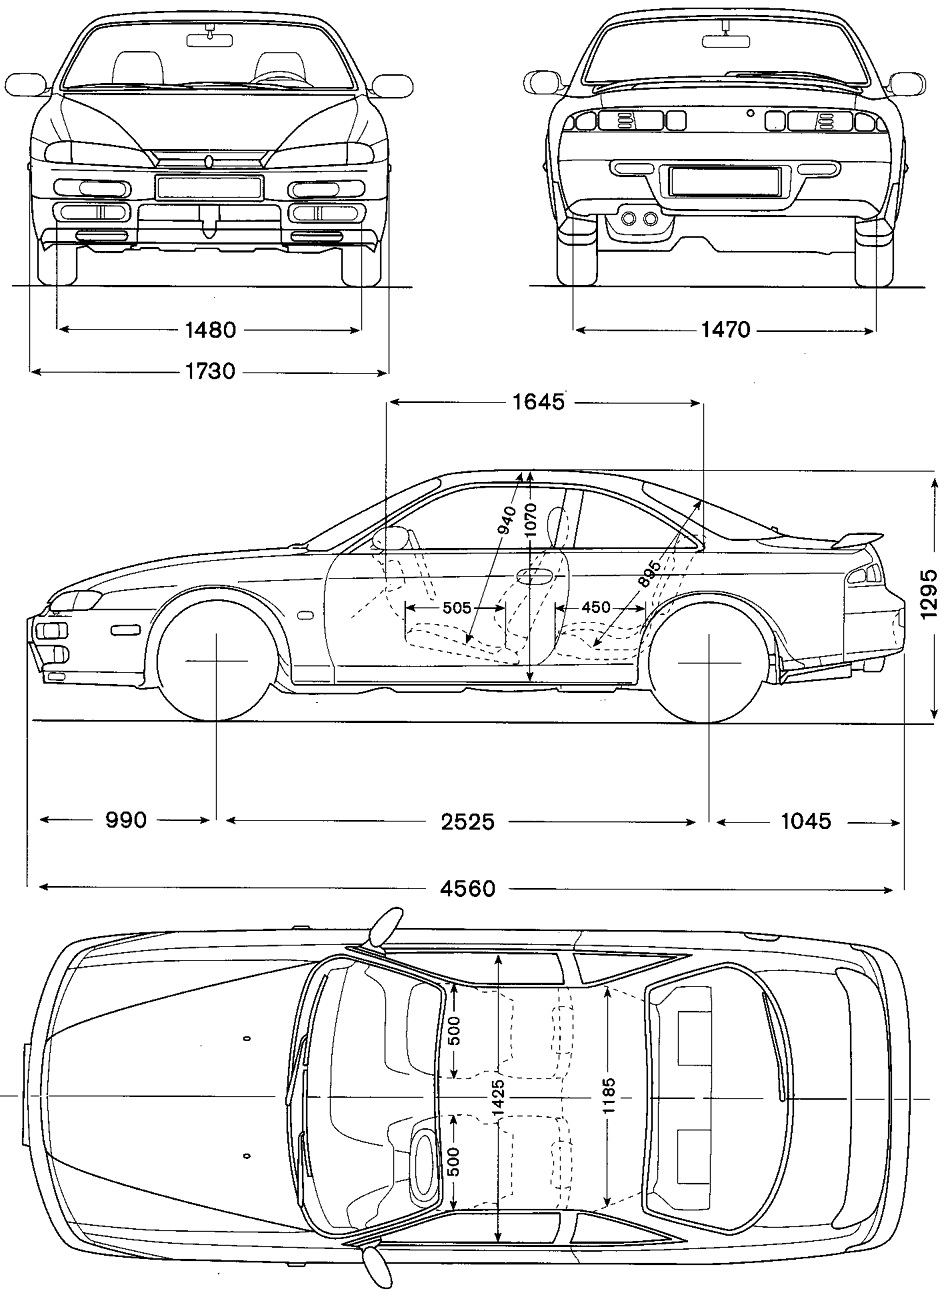 Nissan 240SX blueprint